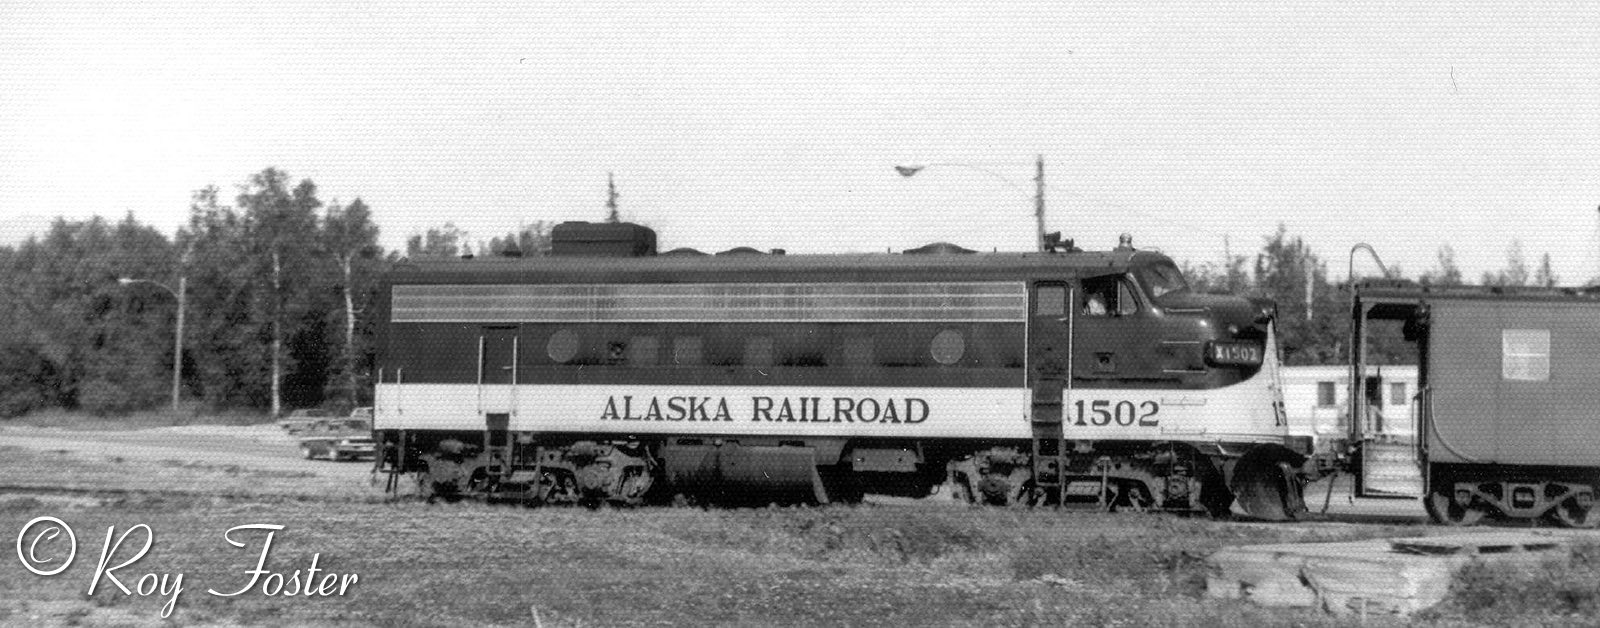 ARR 1502, Anchorage, 8-11-73